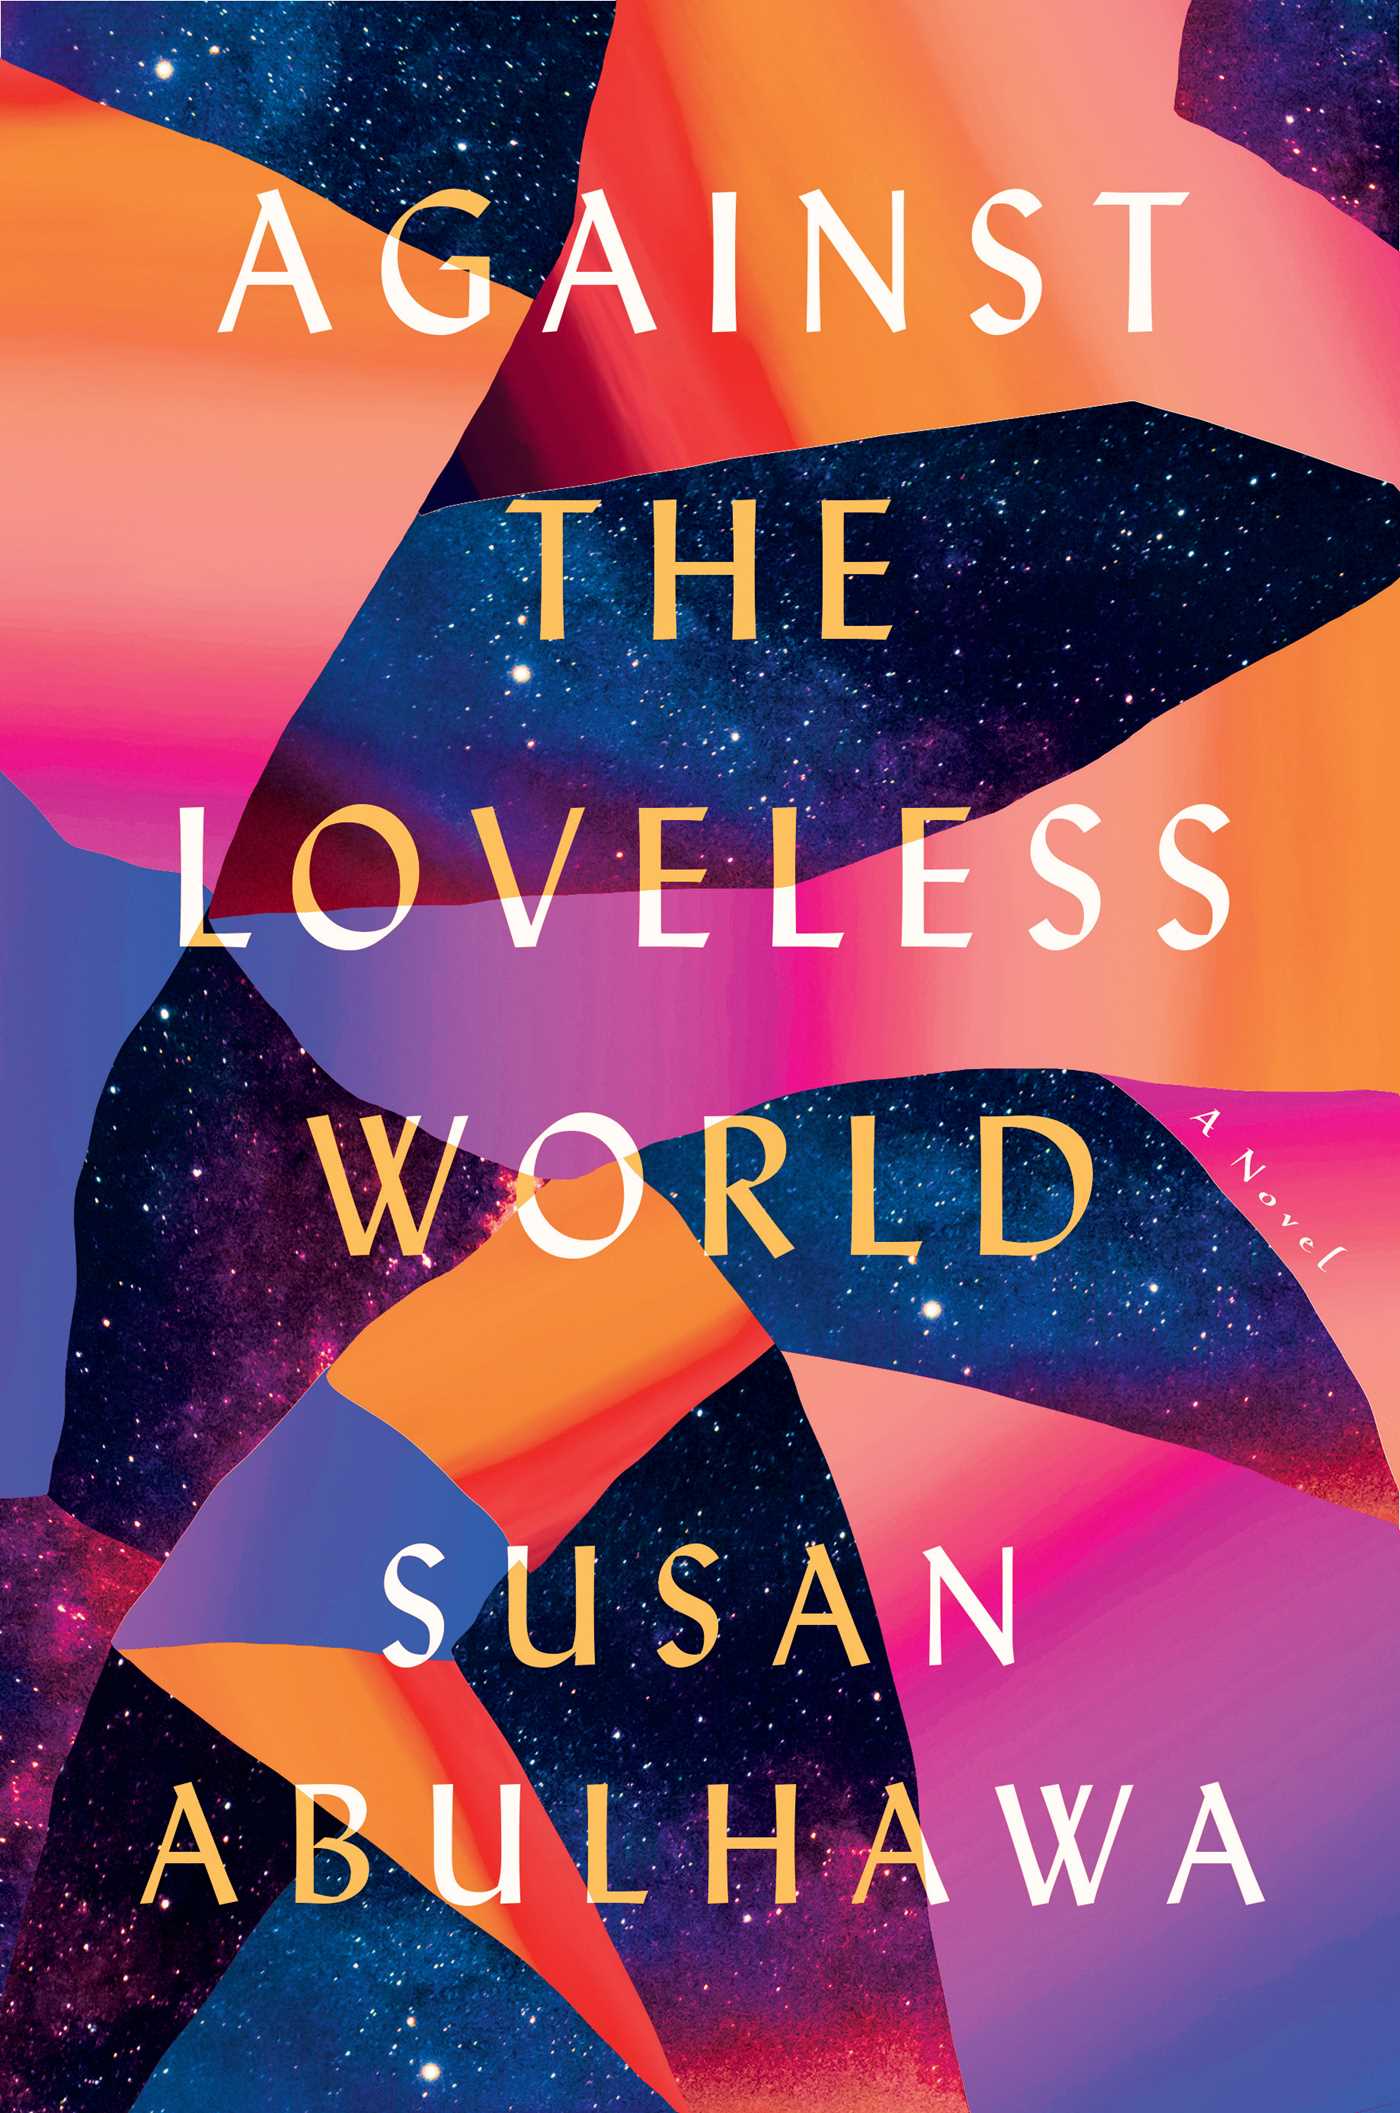 Against the Loveless World - Susan Abulhawa